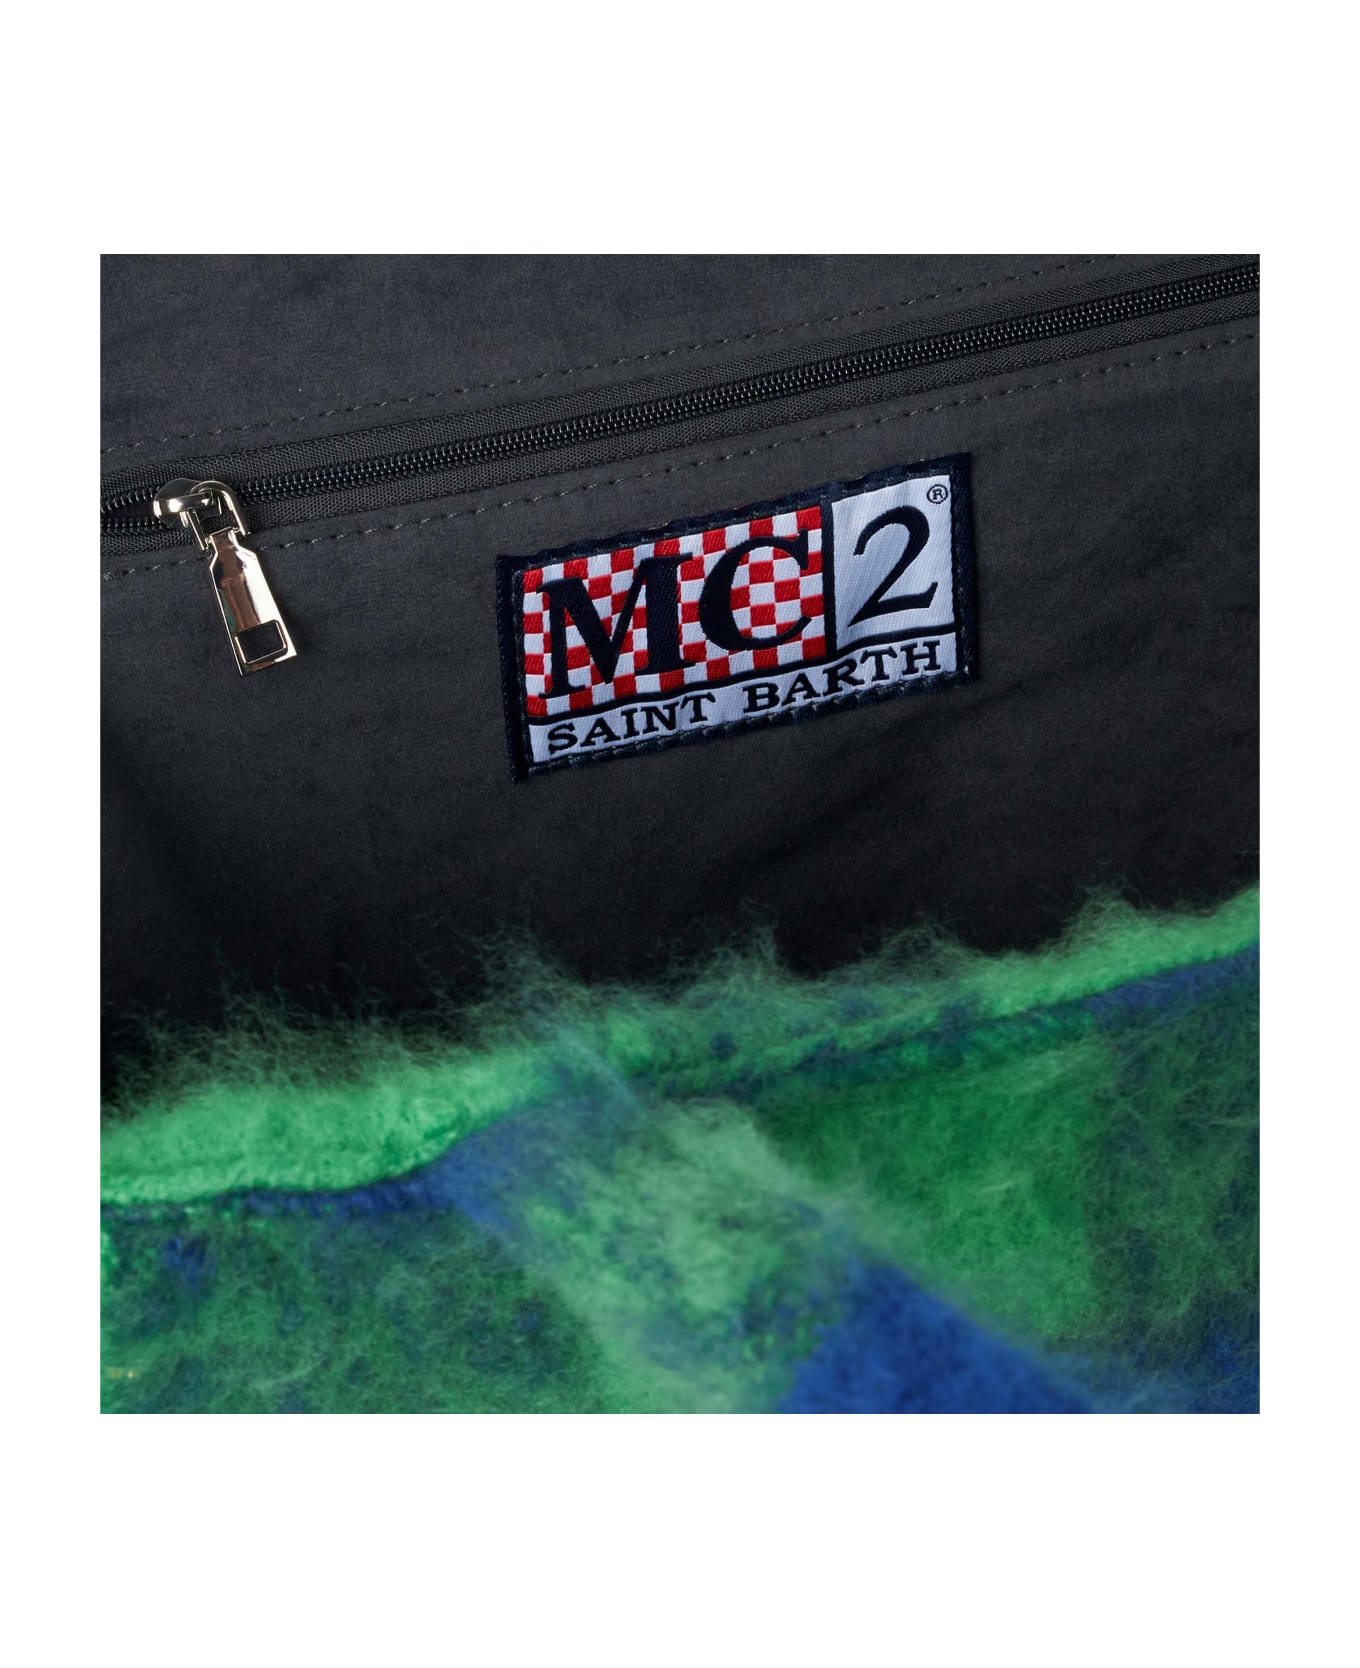 MC2 Saint Barth Vanity Blanket Shoulder Bag With Green And Blue Check - MULTICOLOR